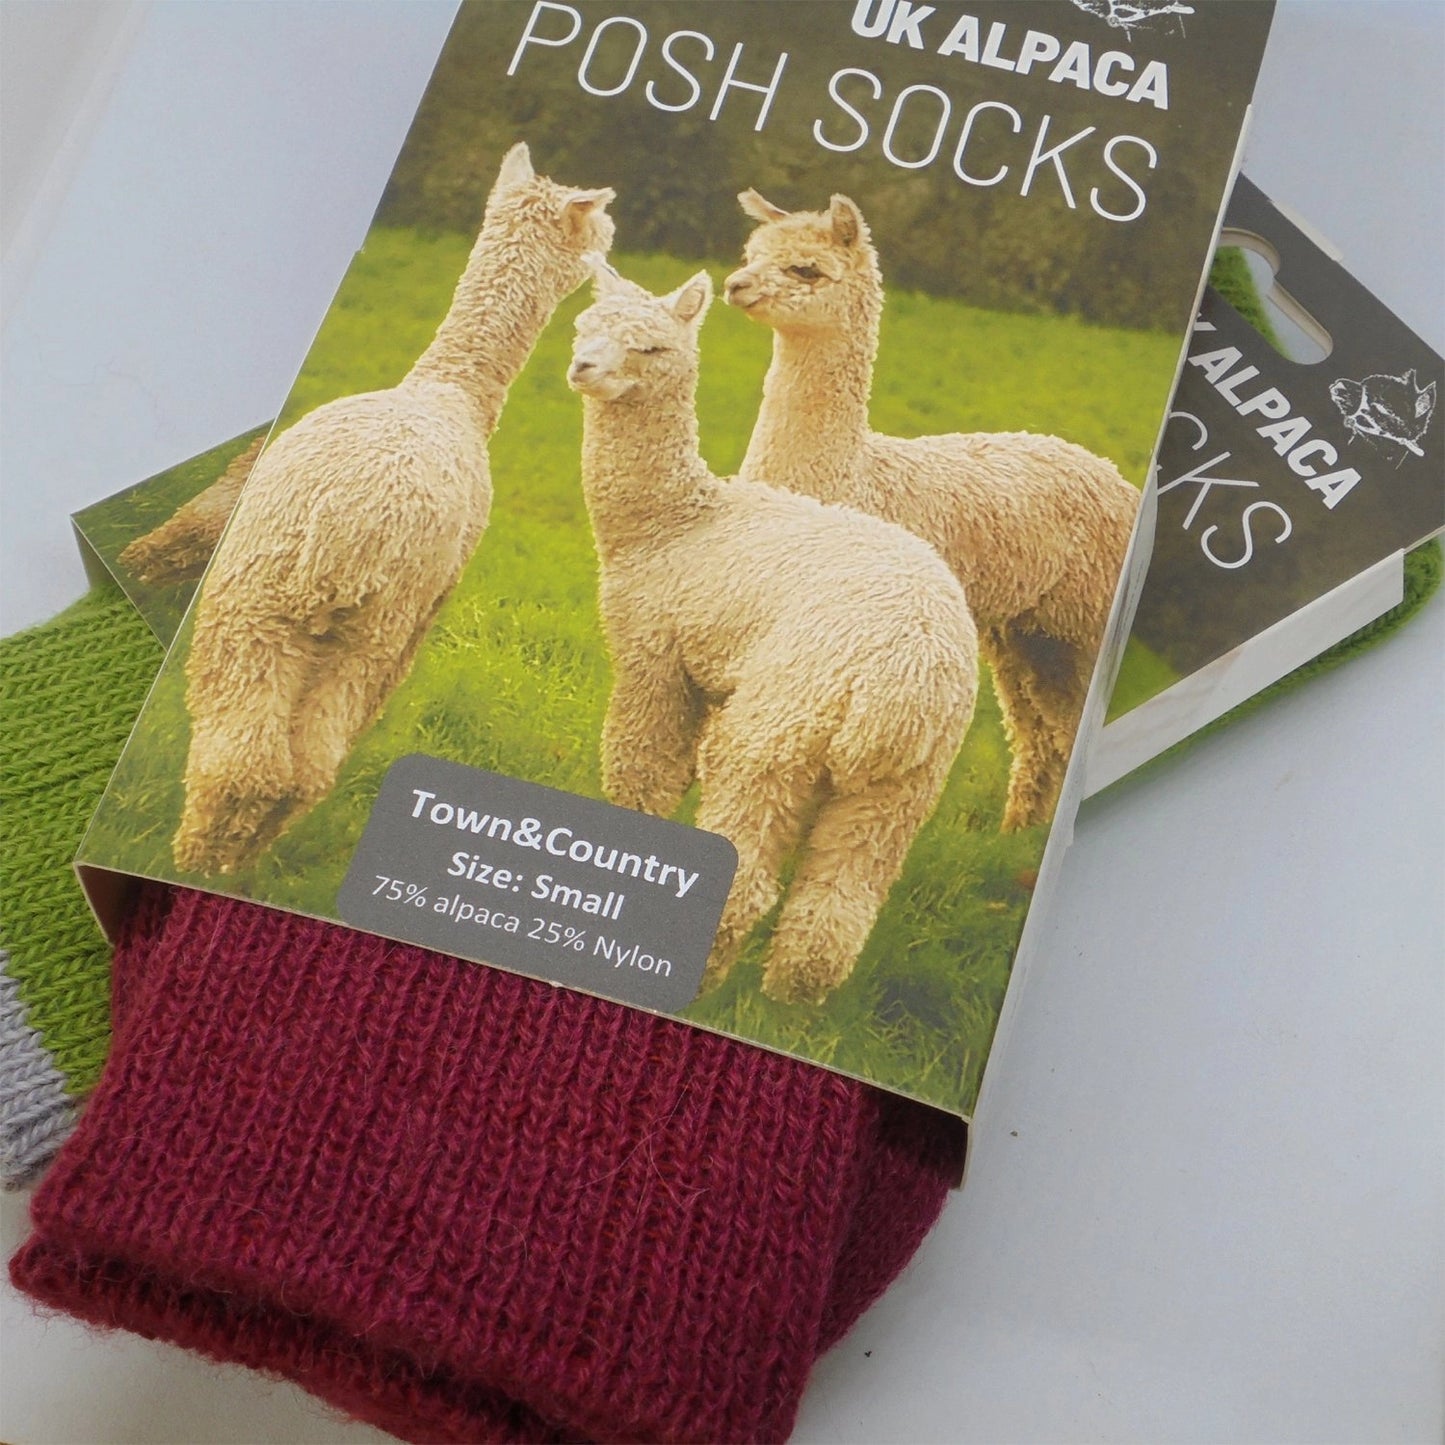 UK Alpaca Posh Alpaca Socks - Town and Country